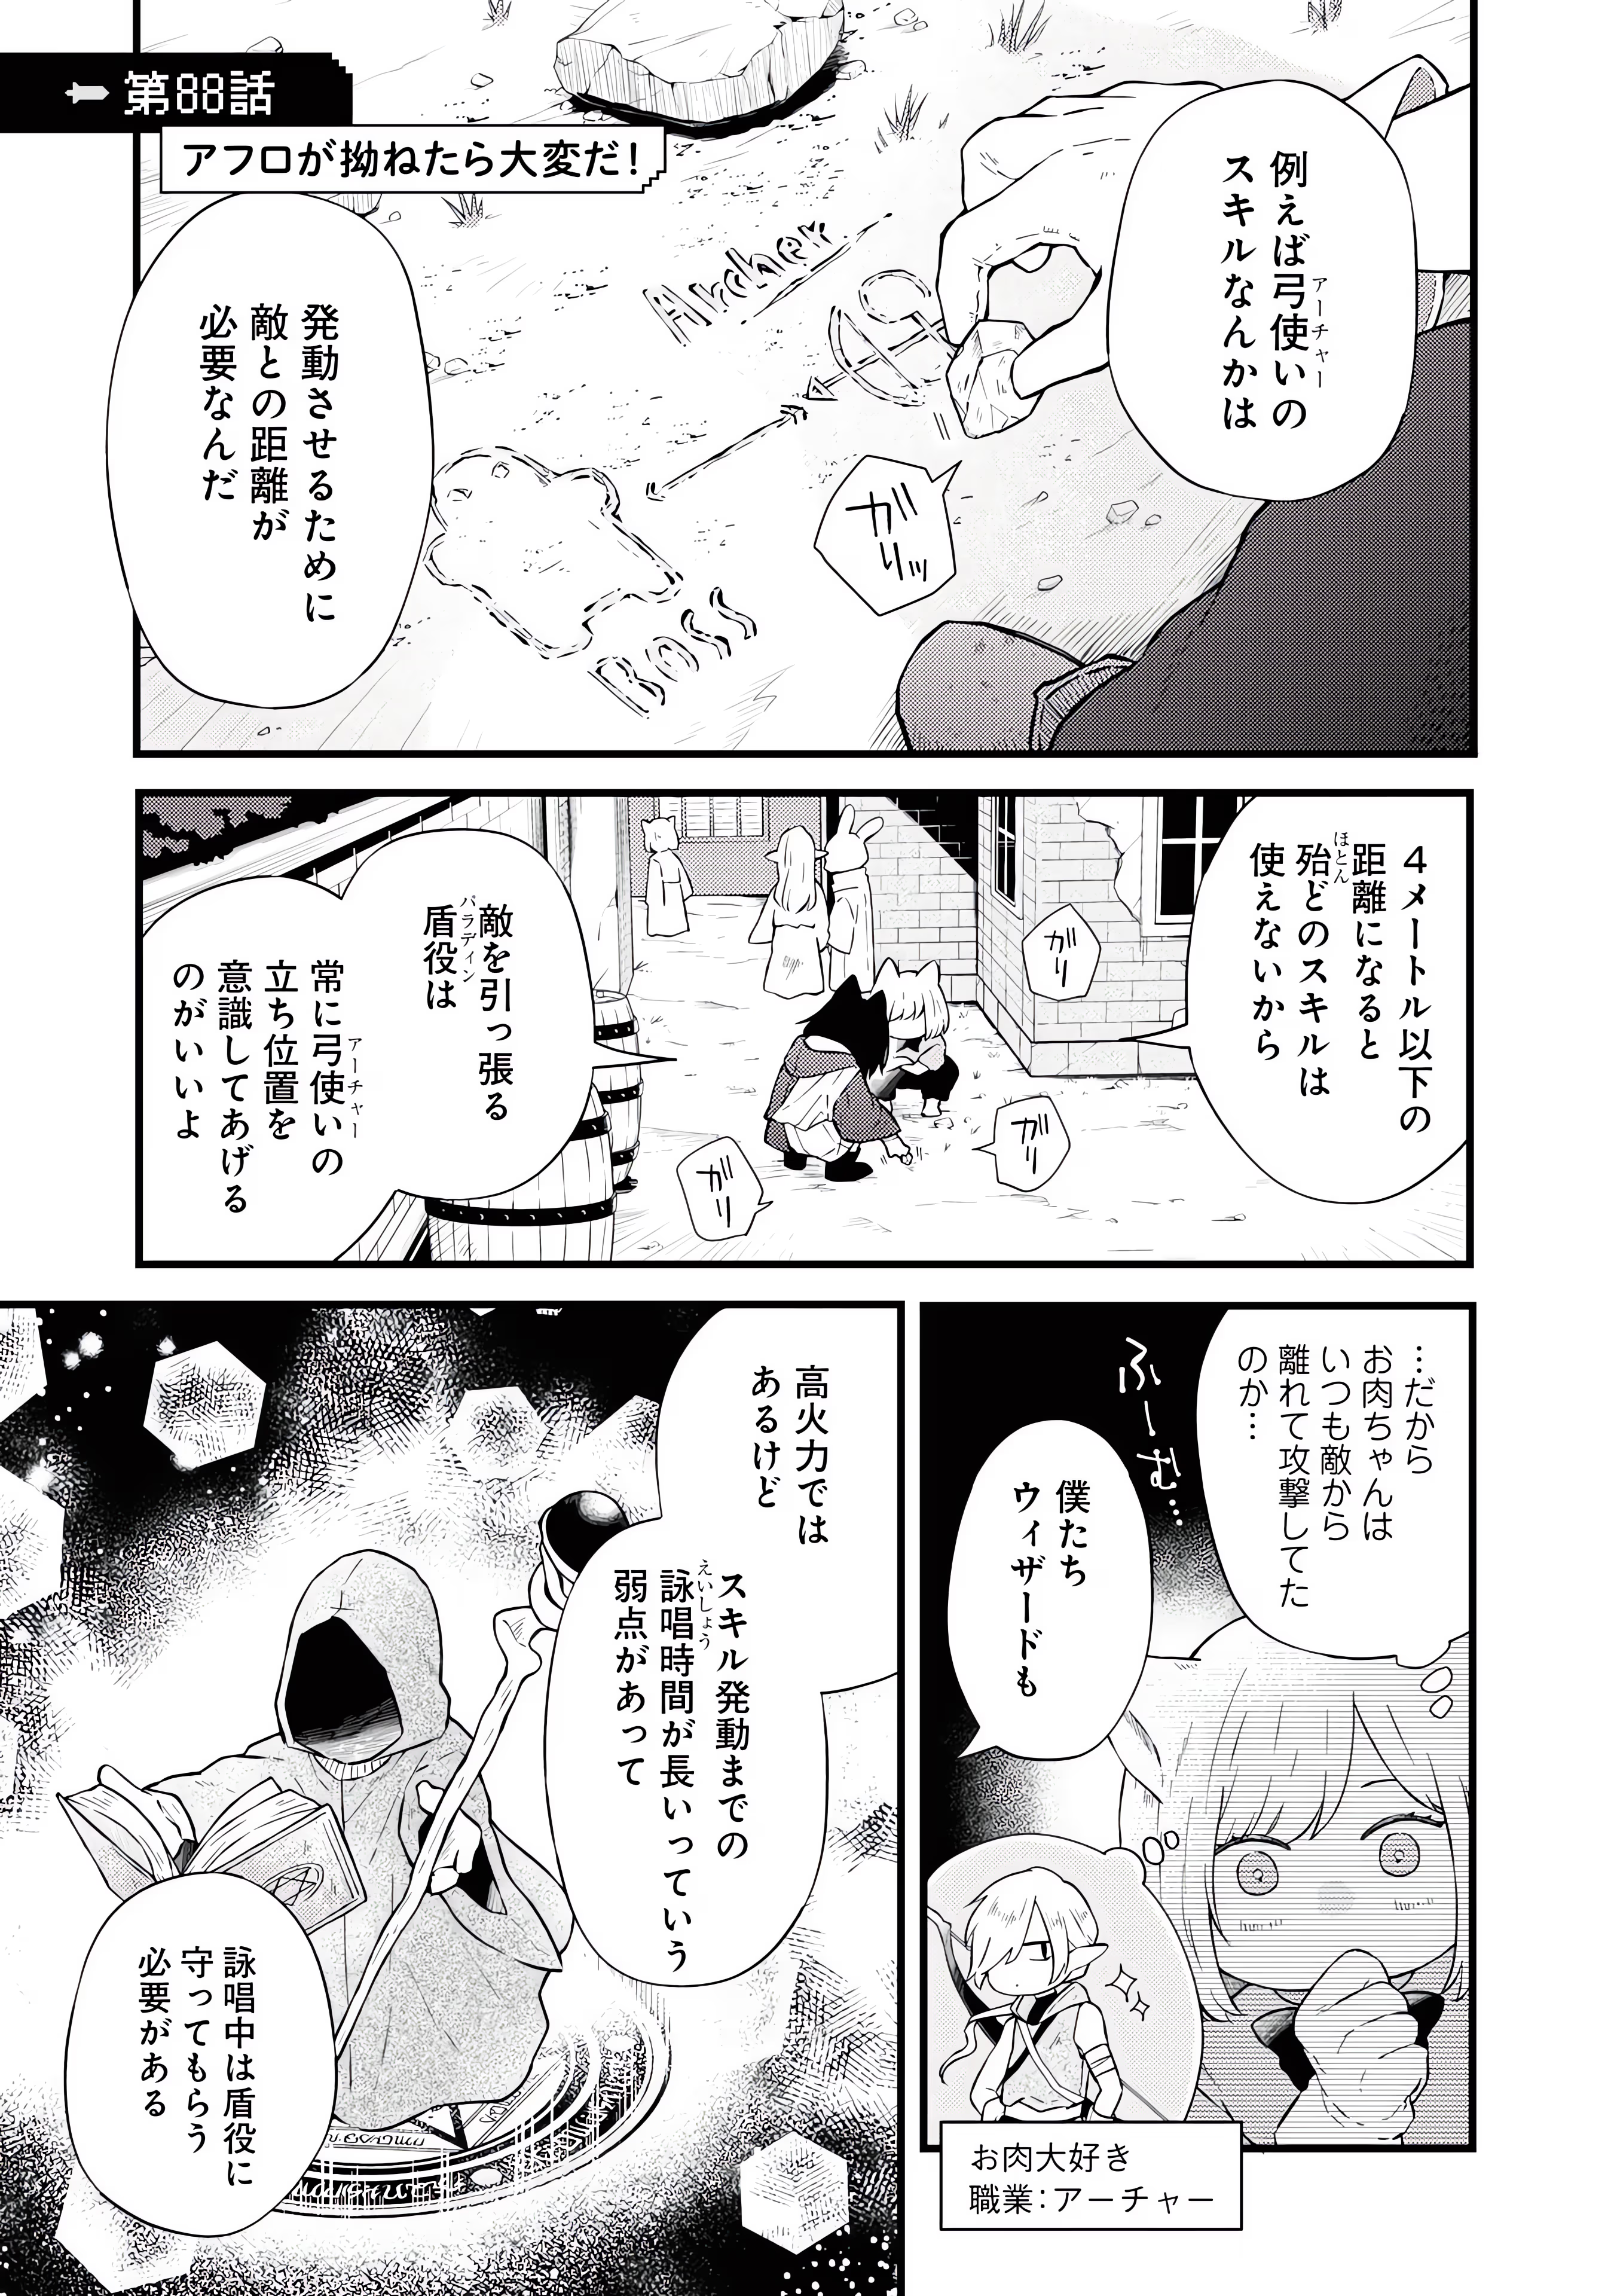 YAMADA-KUN TO Lv999 NO KOI WO SURU Vol.1 Japanese Language Anime Manga Comic